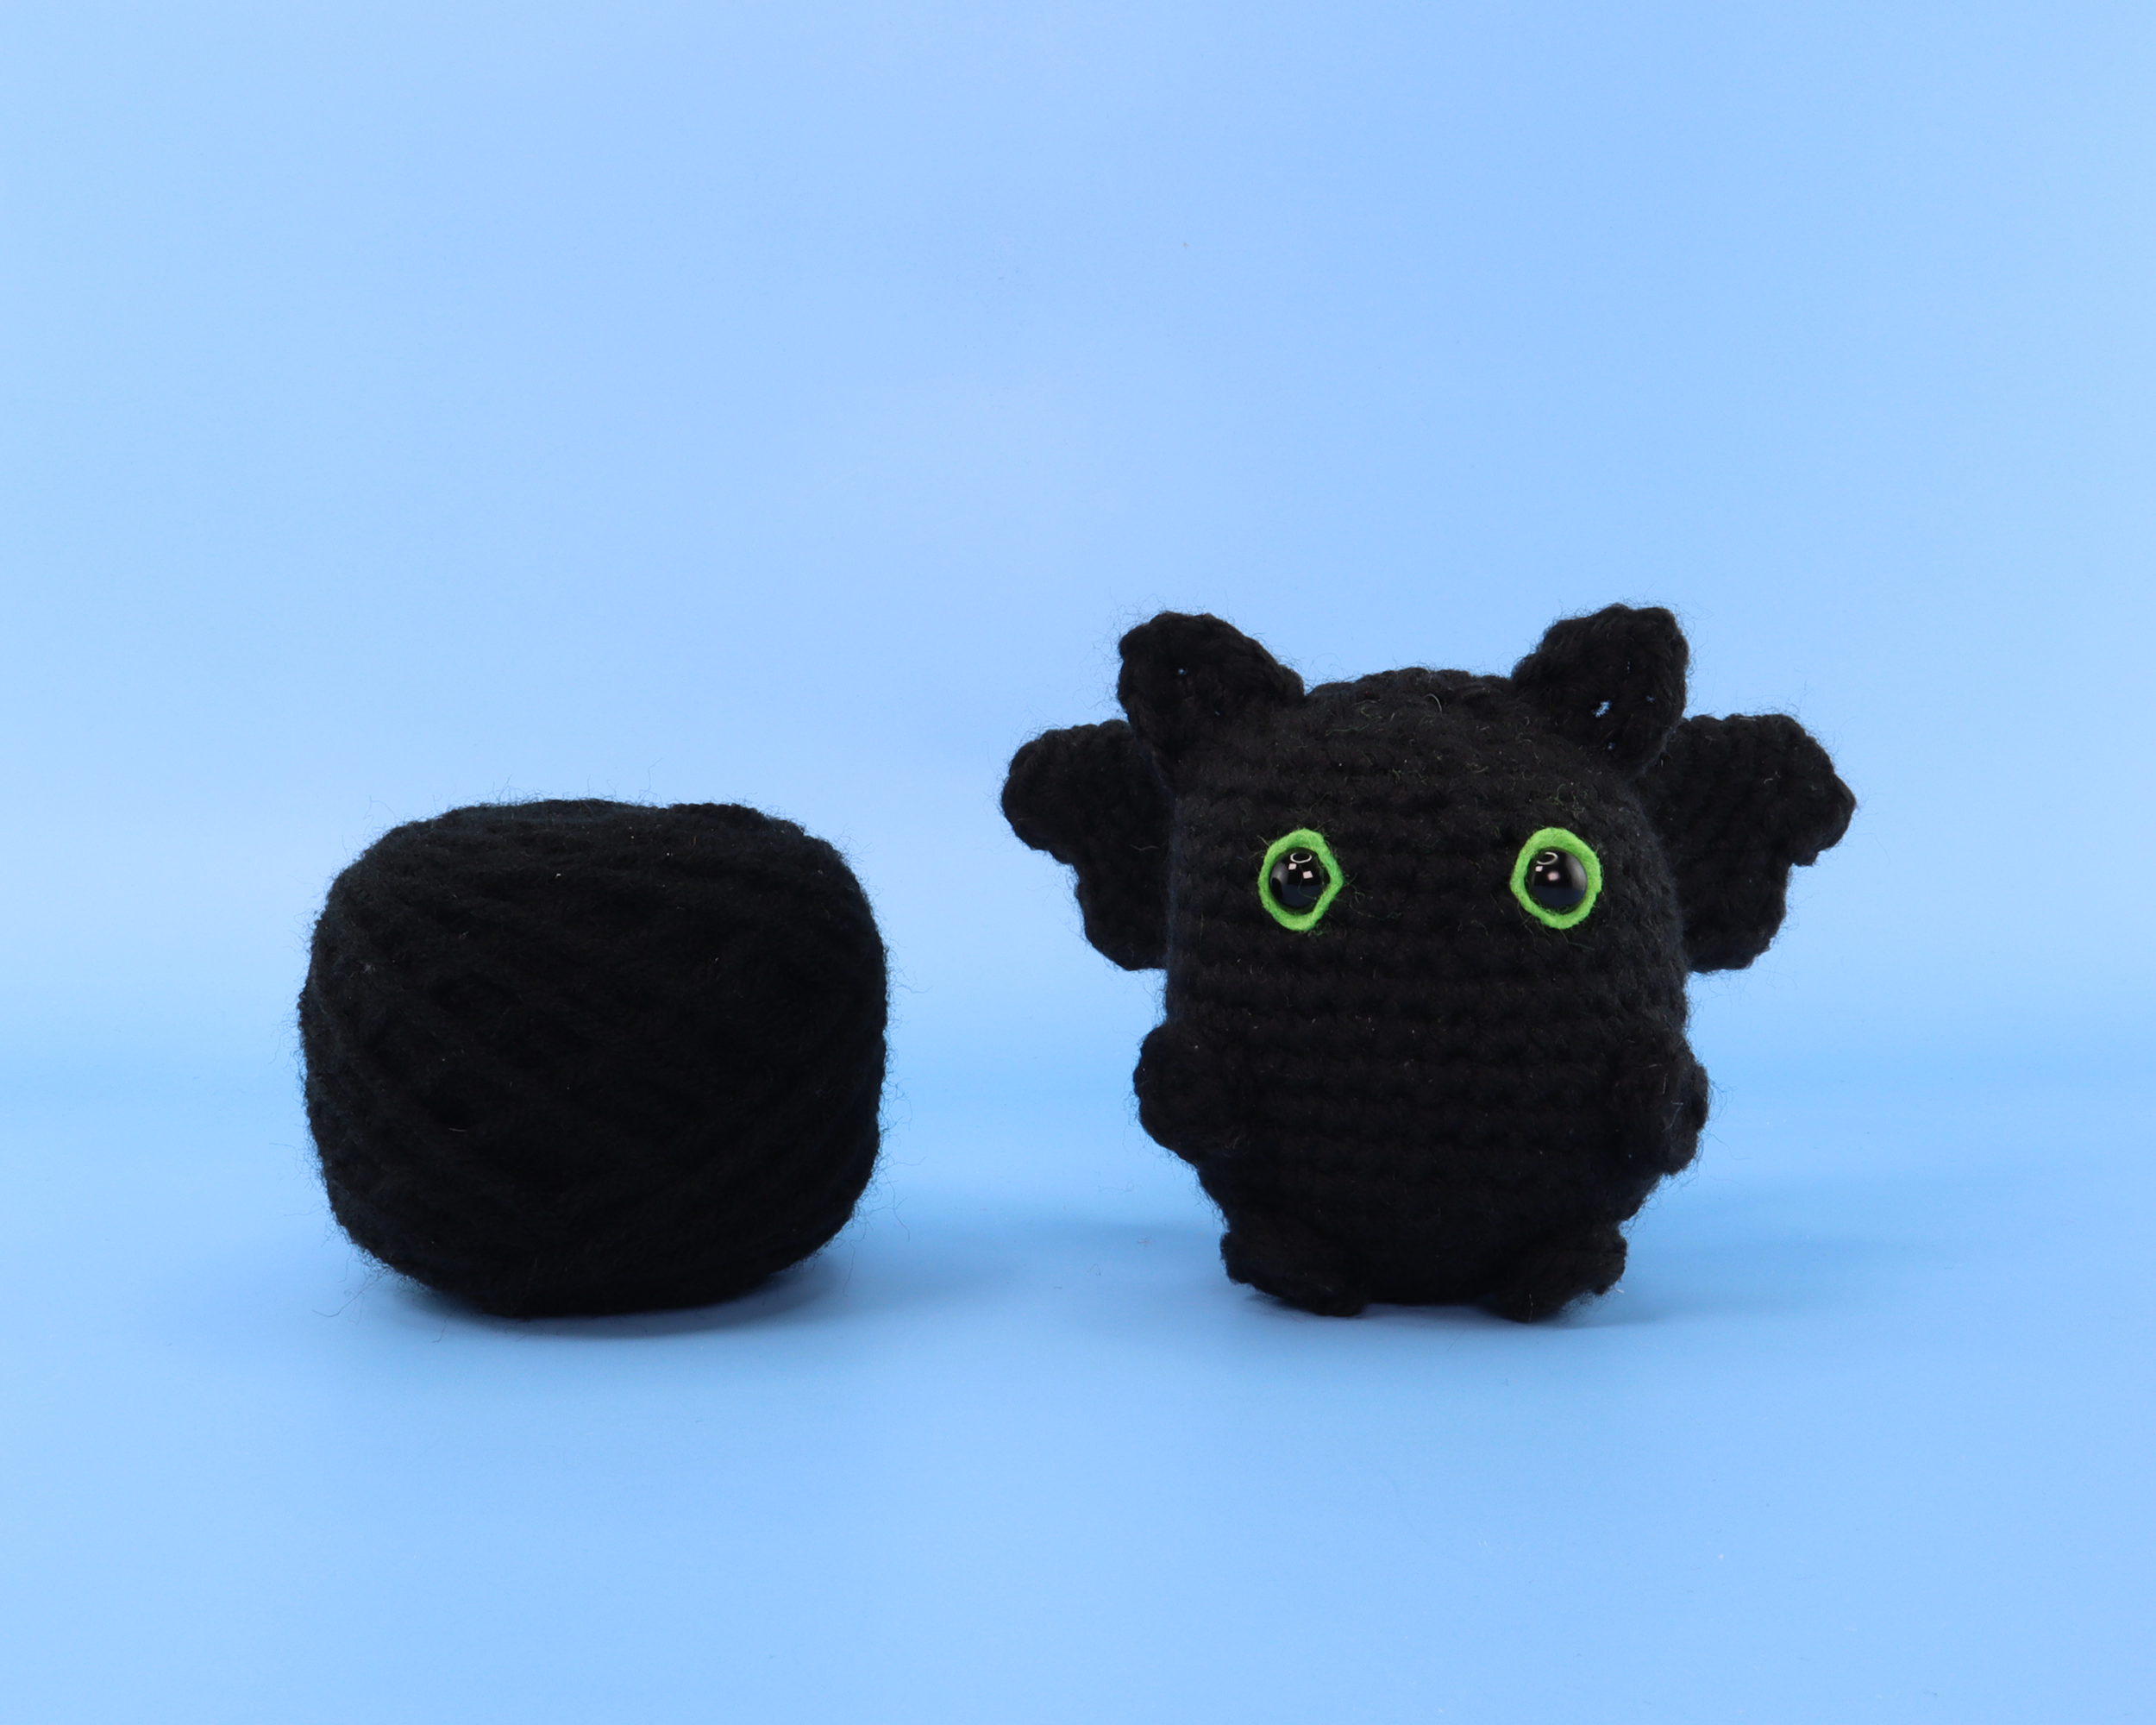 Shadow The Black Dragon Crochet Kit